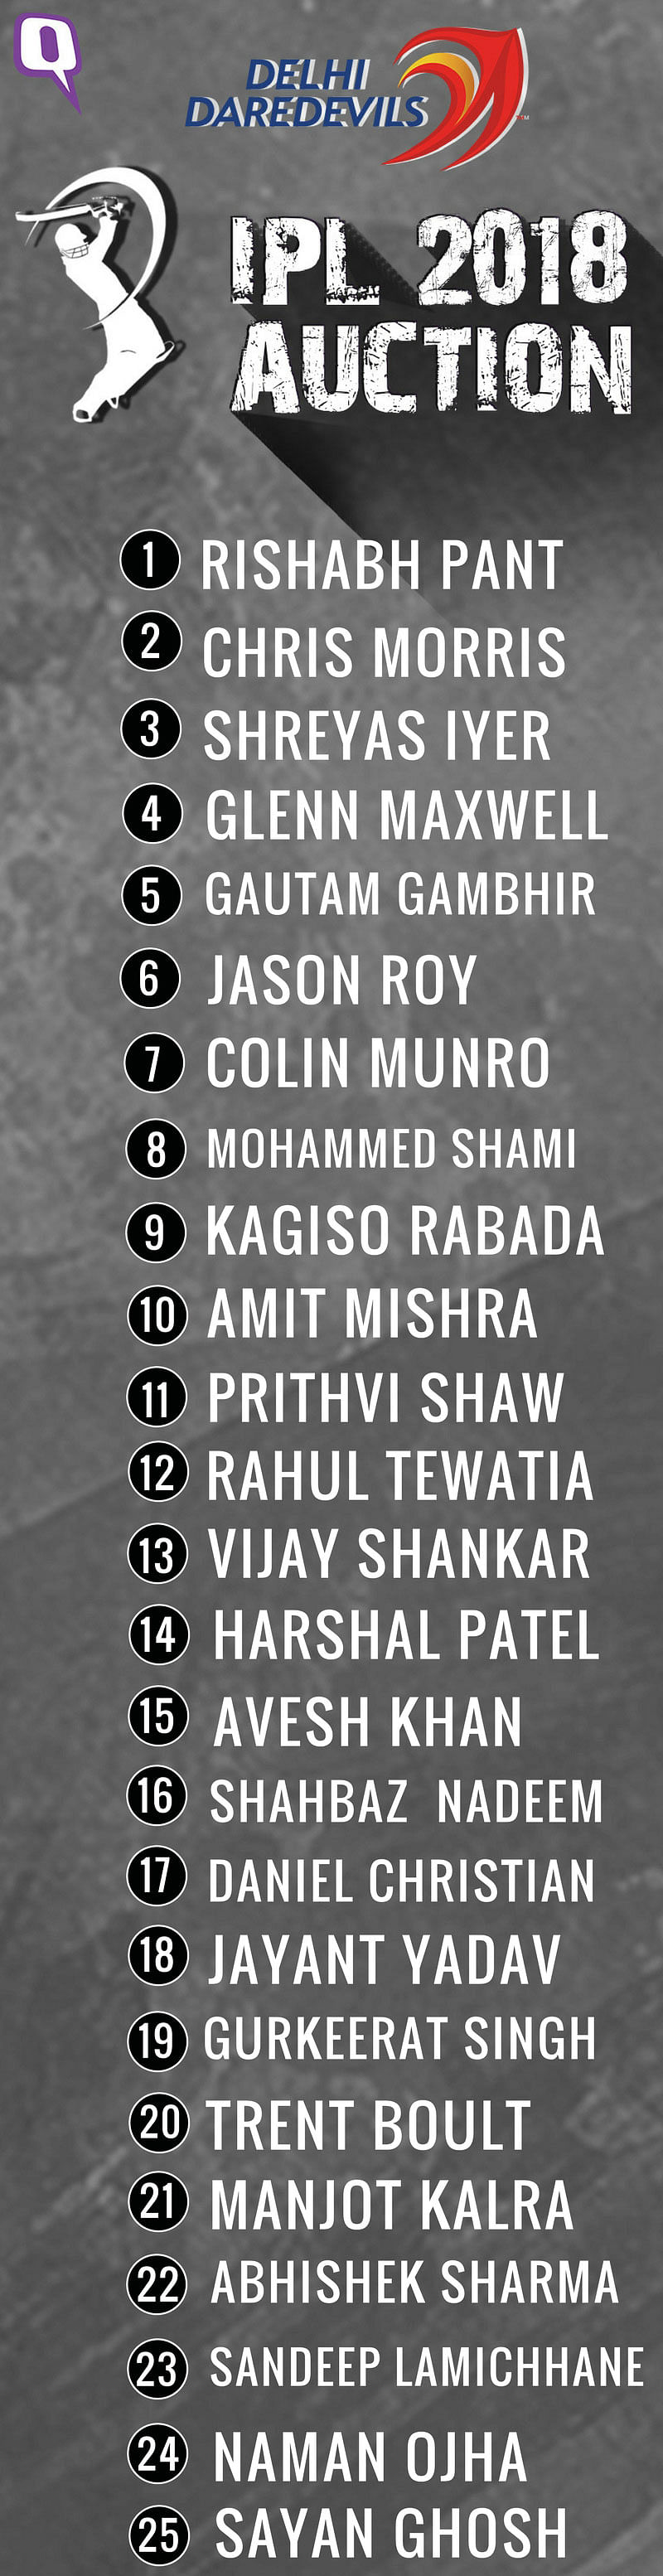 Here’s what Delhi Daredevils’ squad for IPL 2018 looks like so far.